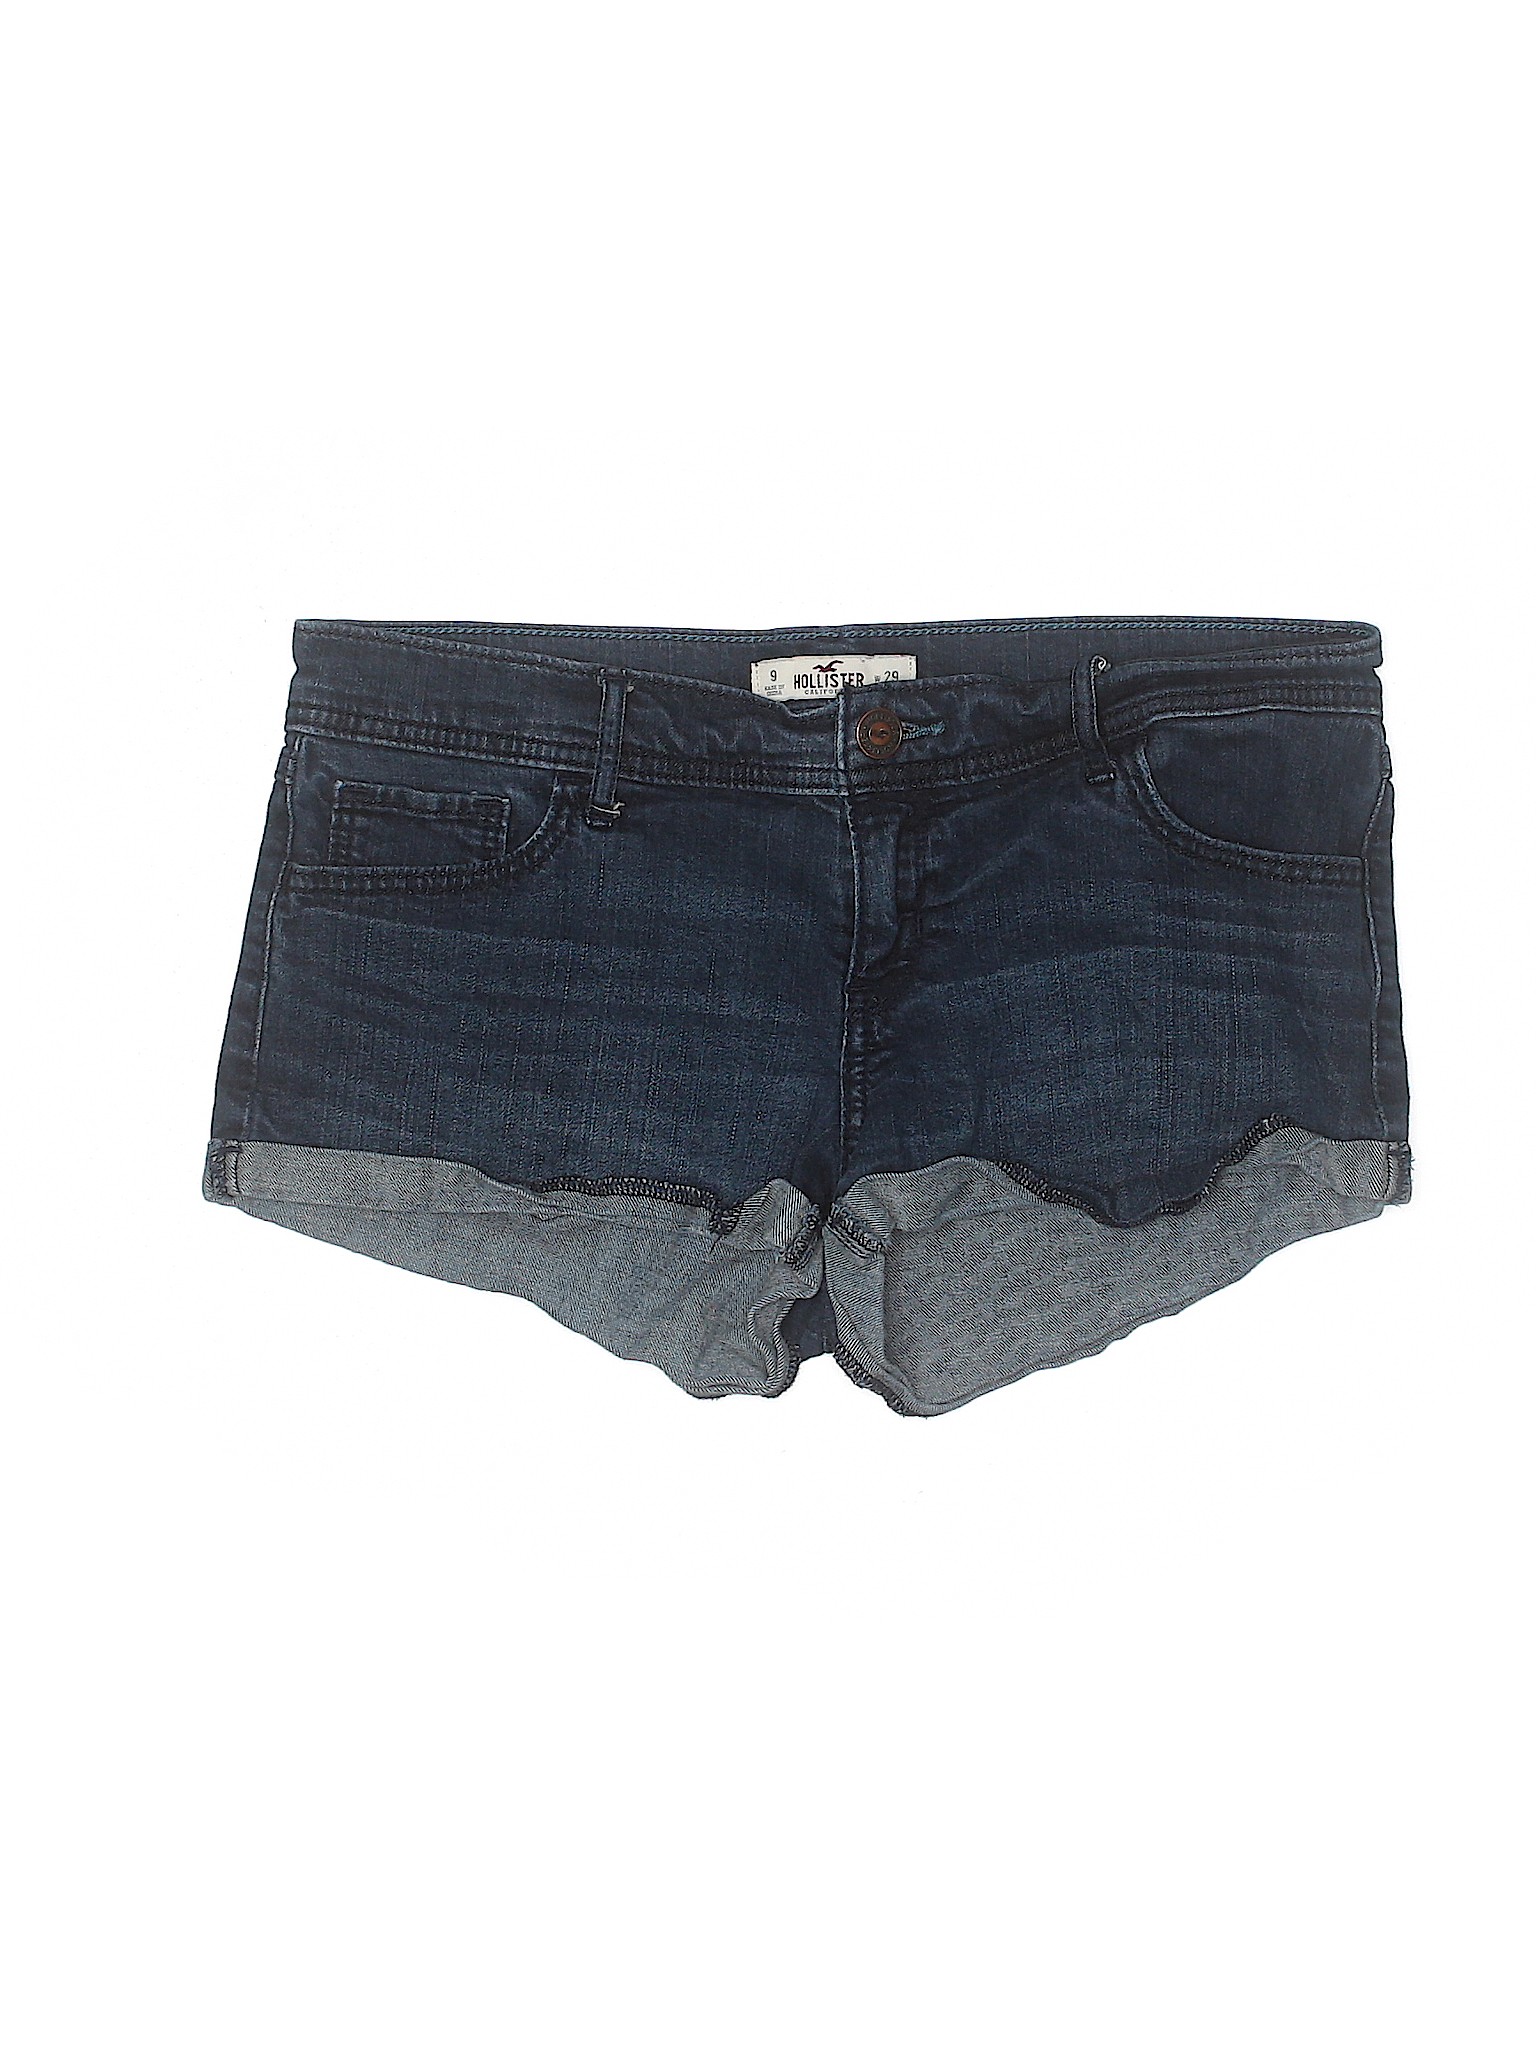 Hollister Women Blue Denim Shorts 9 | eBay